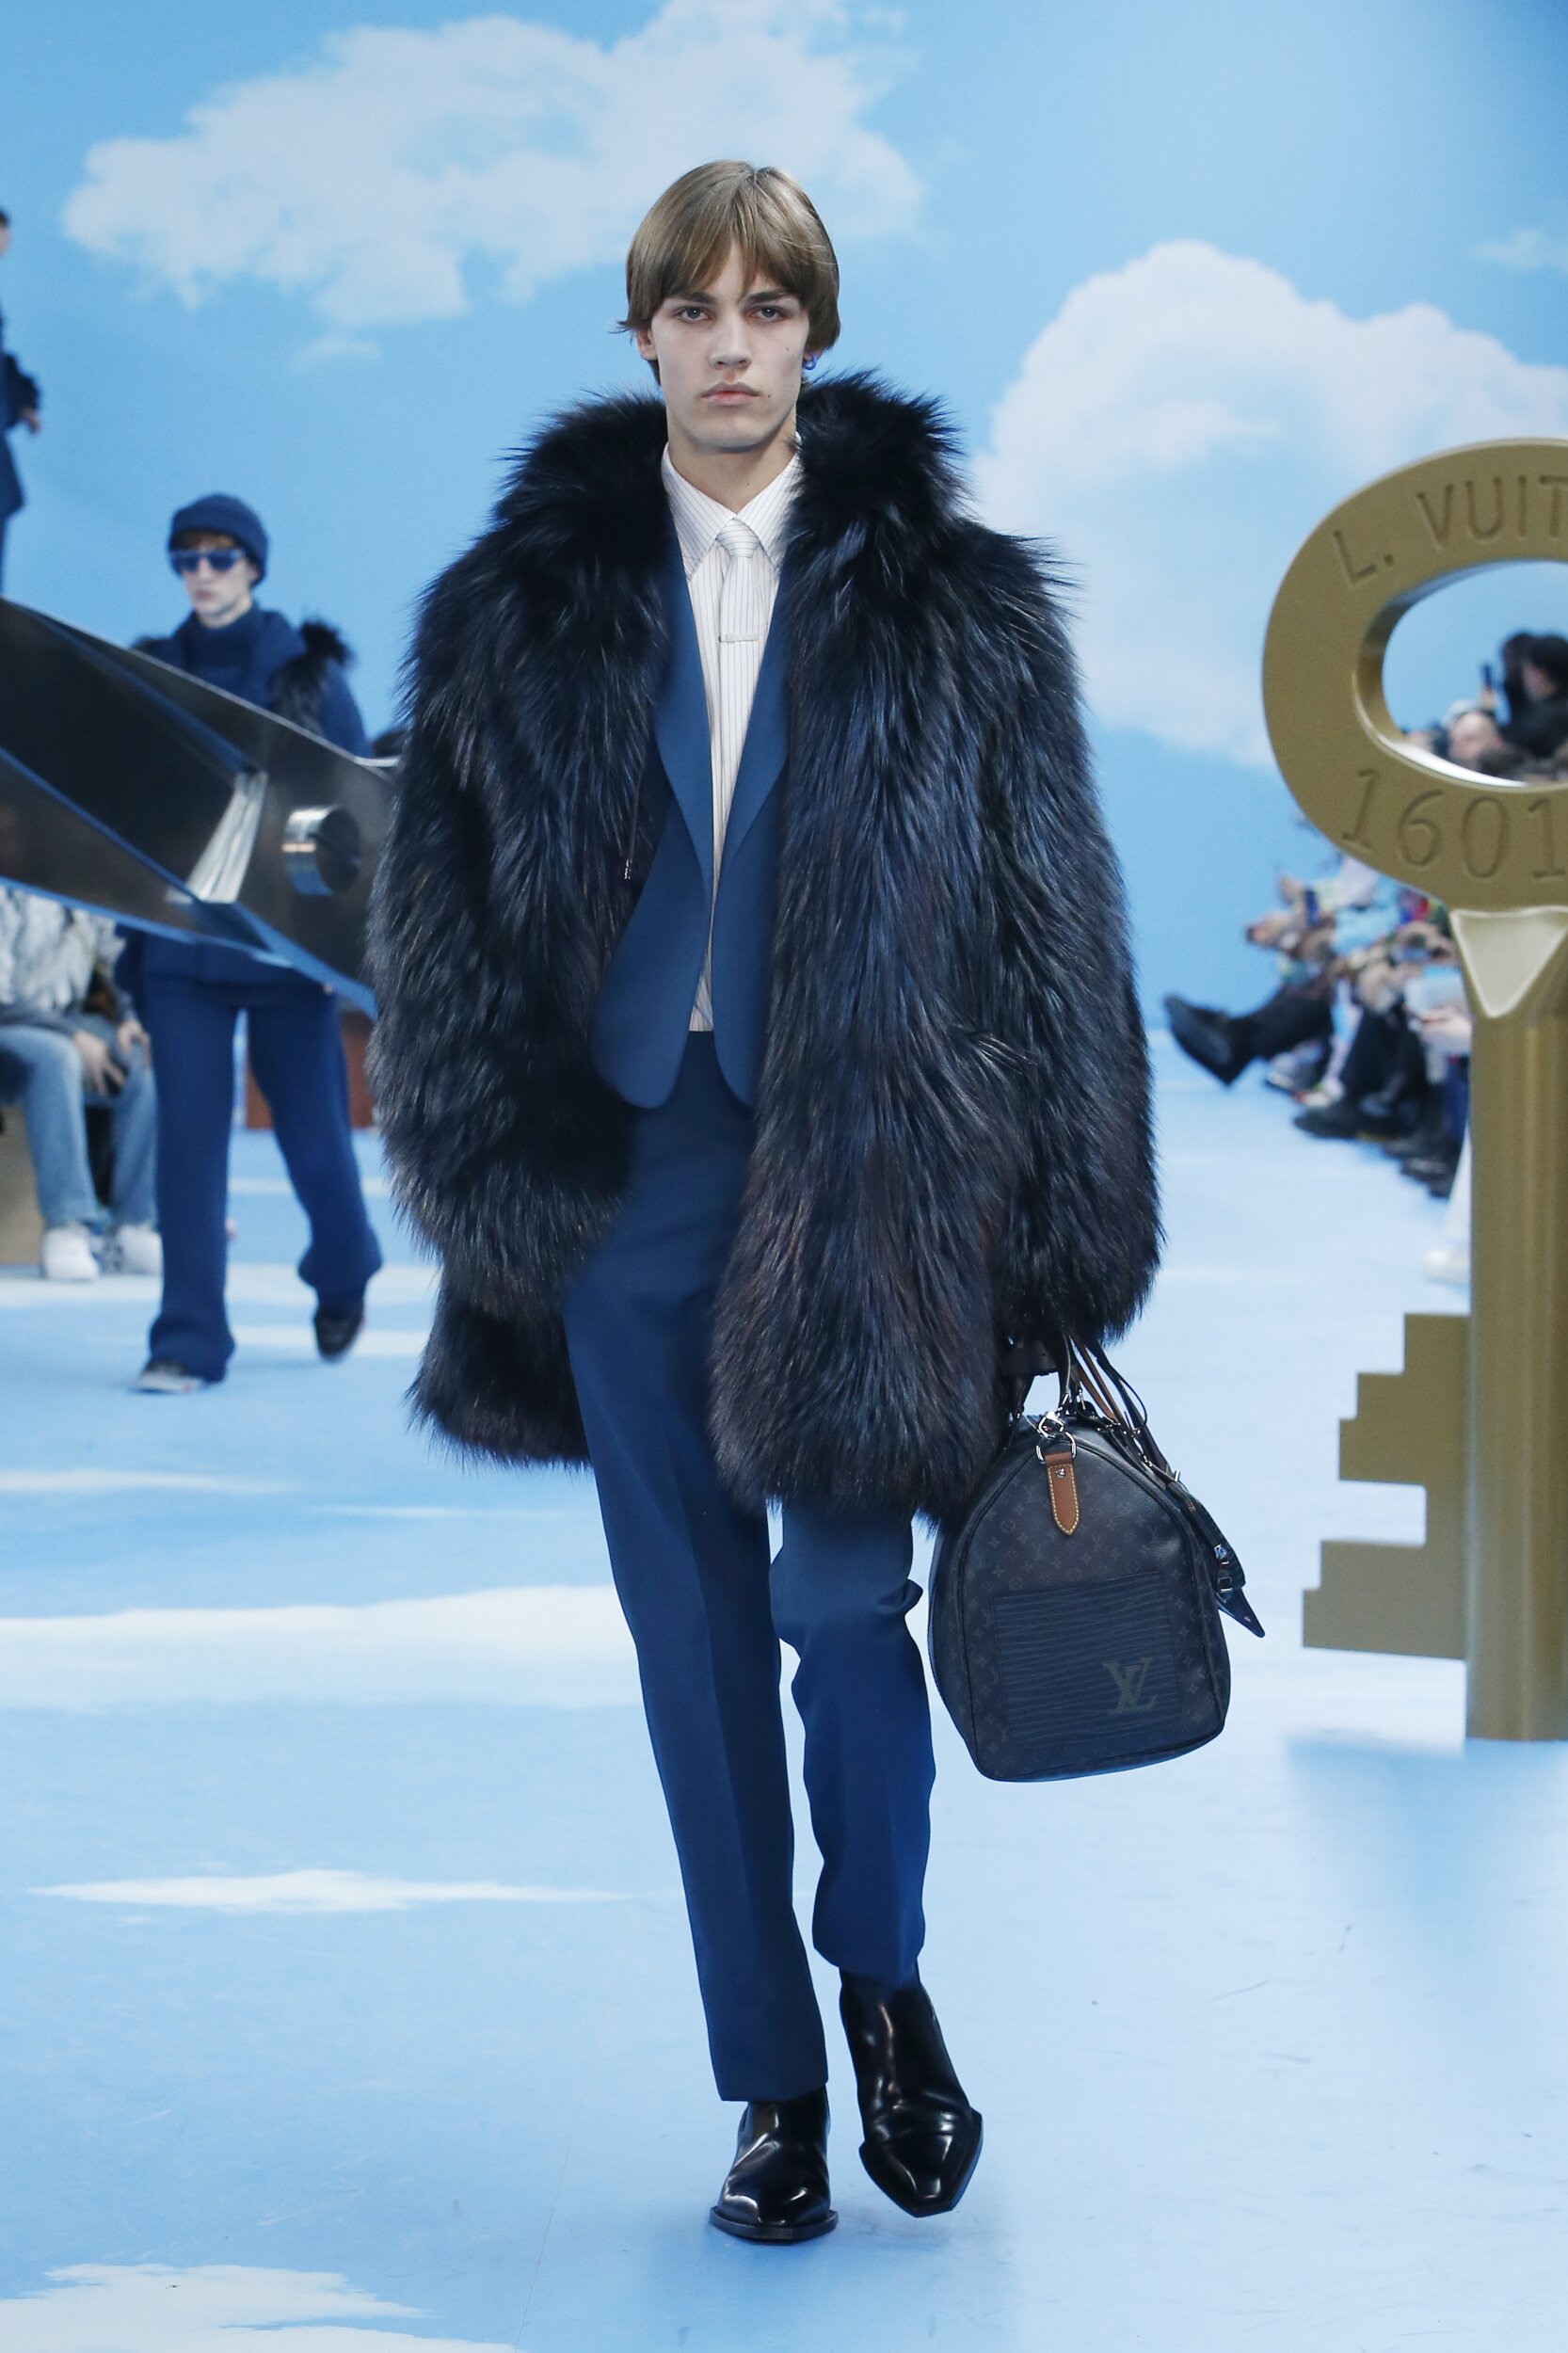 Louis Vuitton Wrap Coat White Men's - FW21 - US